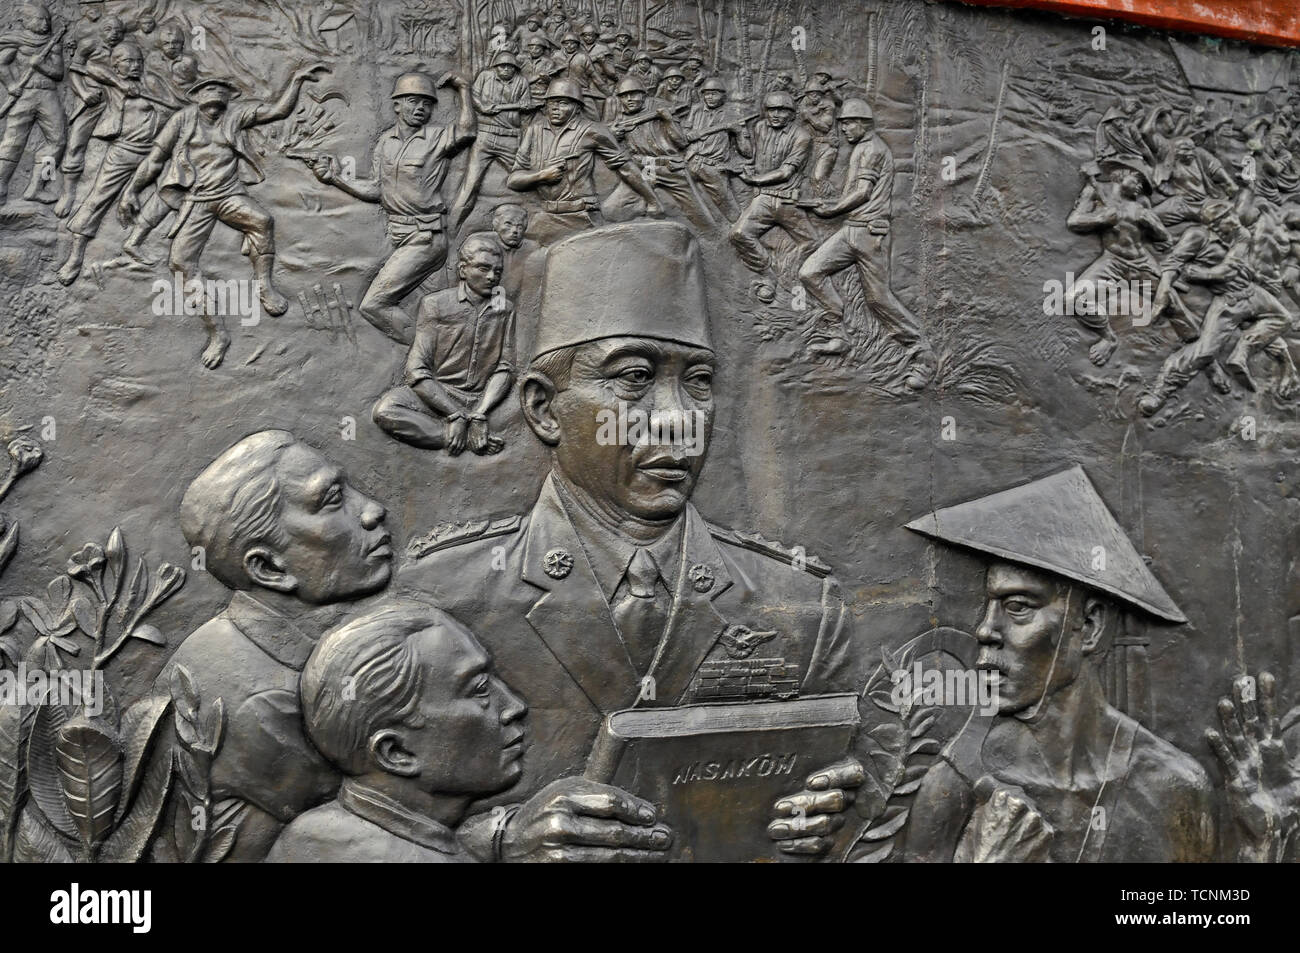 jakarta, dki jakarta/indonesia - april 20, 2009: detail of the relief at pancasila sakti  memorial site Stock Photo